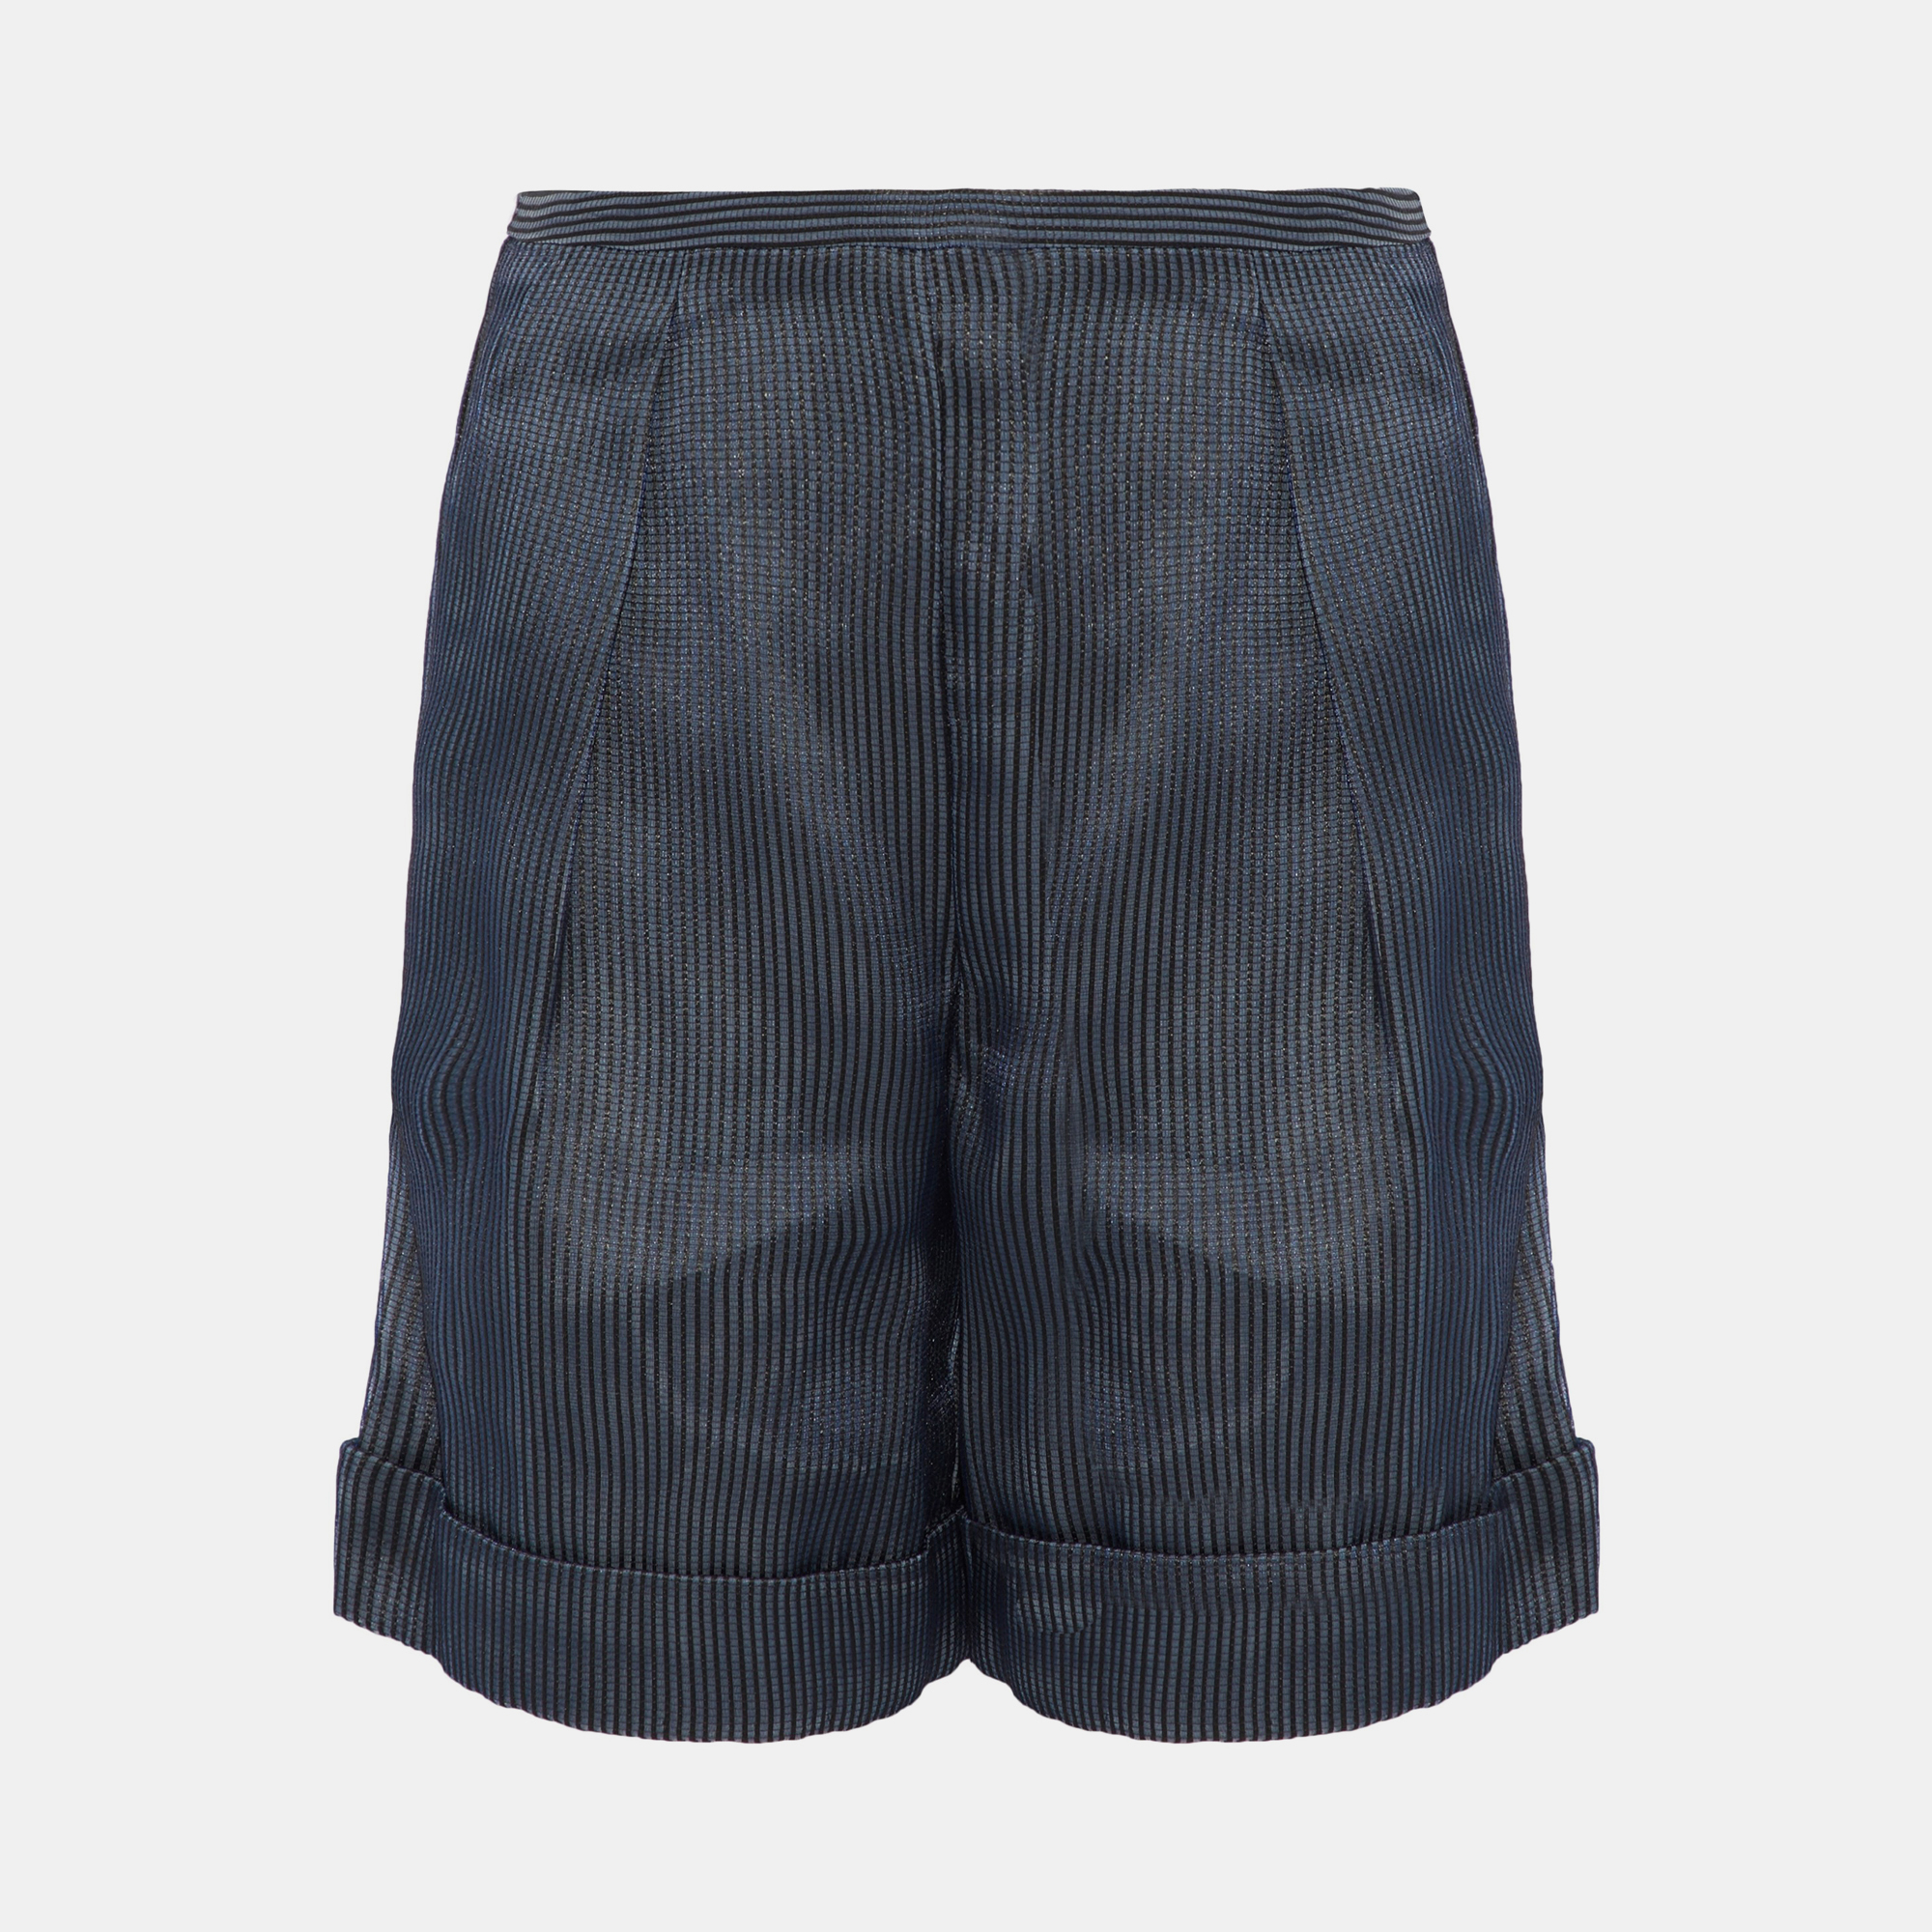 Giorgio armani navy blue striped mesh shorts l (it 44)